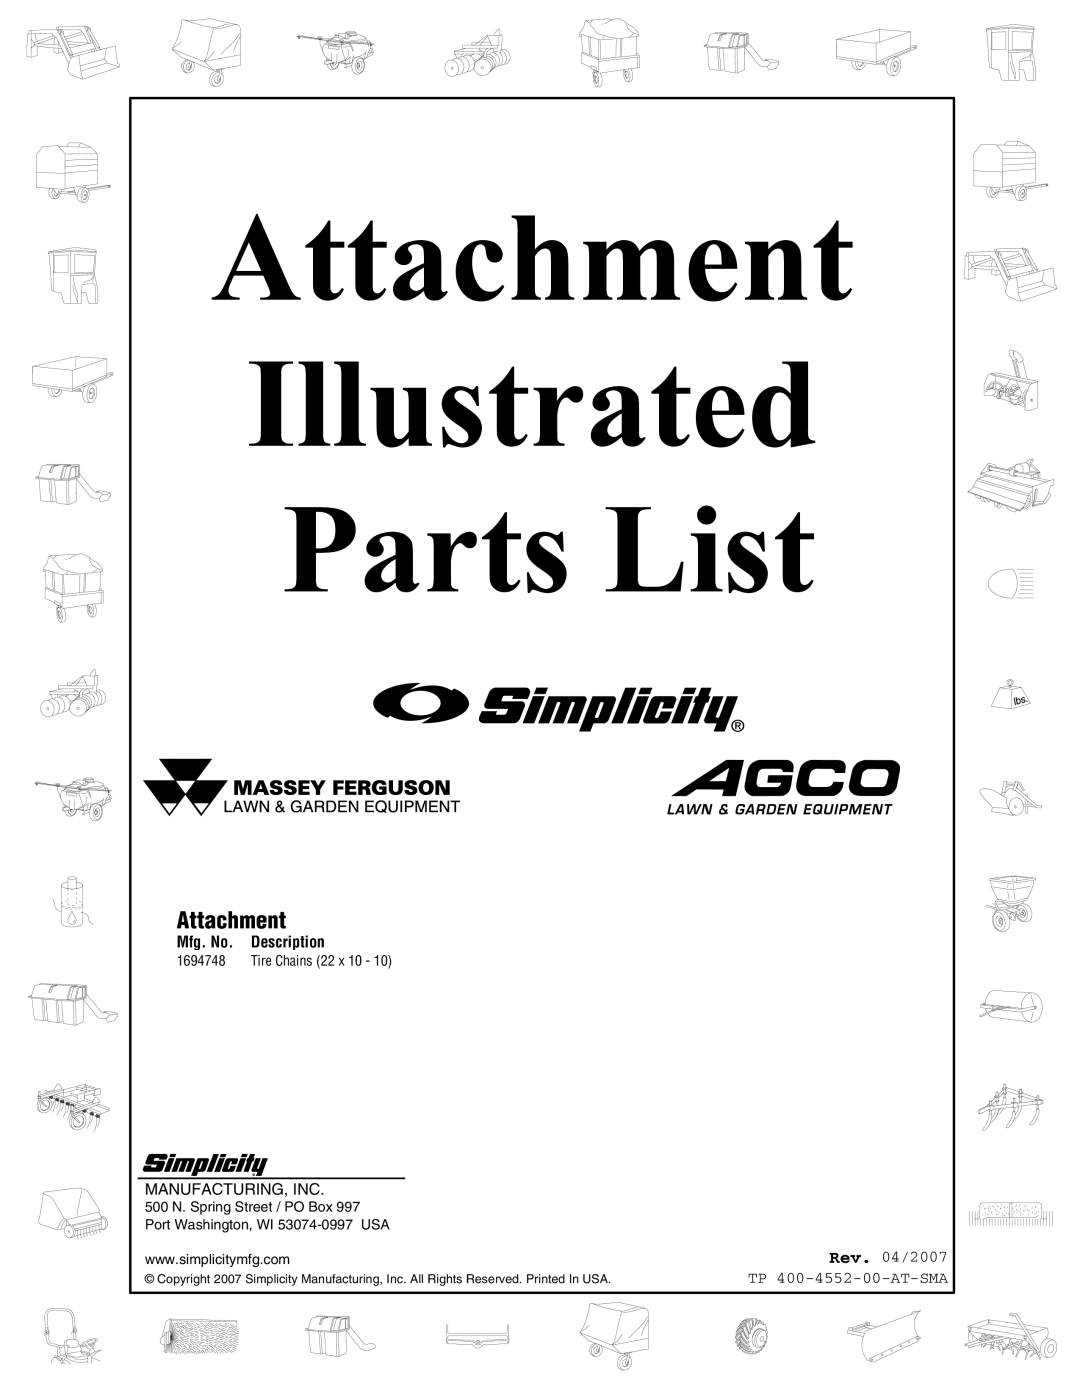 Snapper manual Attachment, Mfg. No. Description, Rev. 04/2007, TP 400-4552-00-AT-SMA, Illustrated, Parts List 